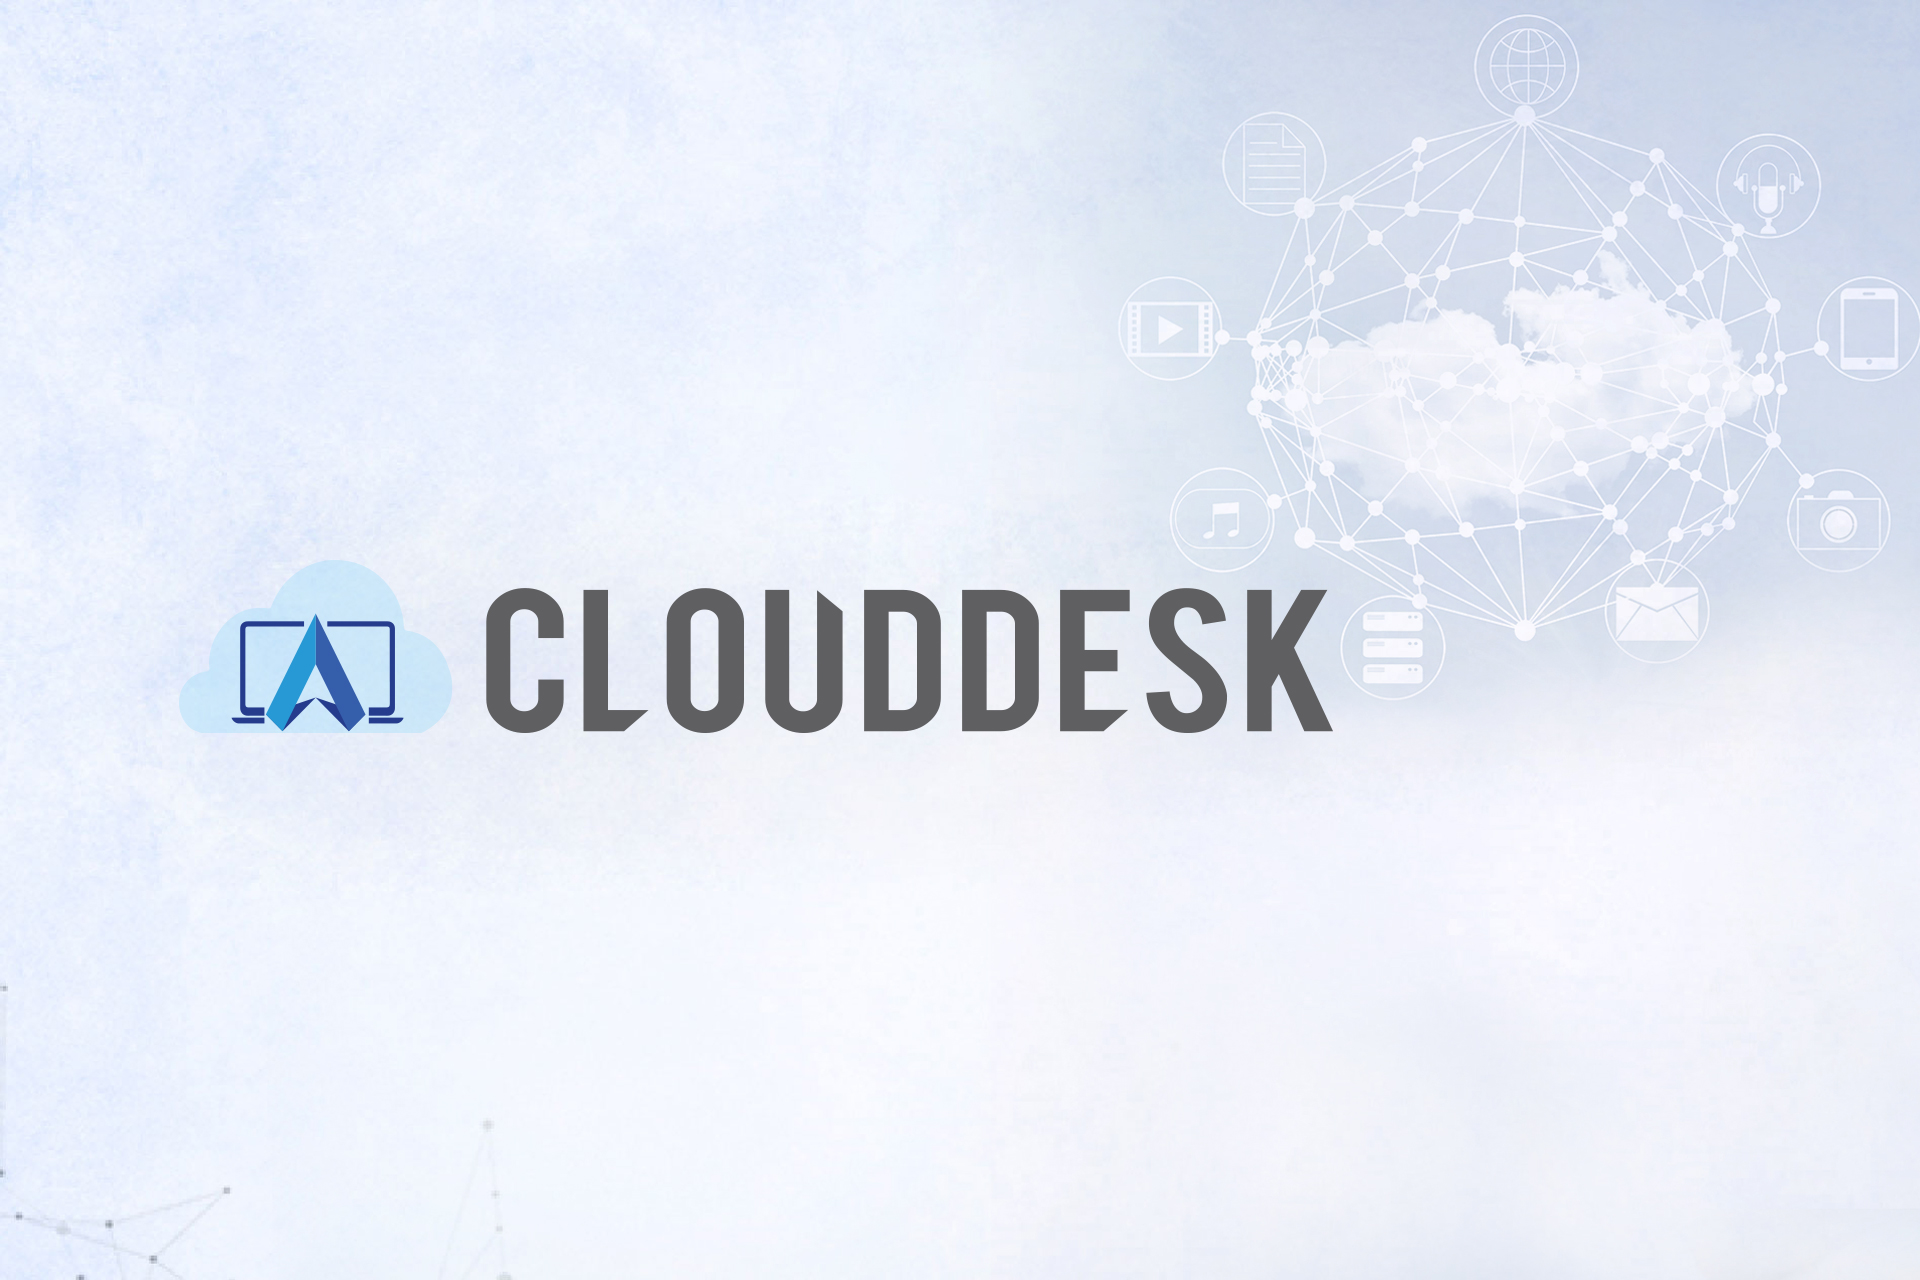 Procomix Technology Group CloudDesk